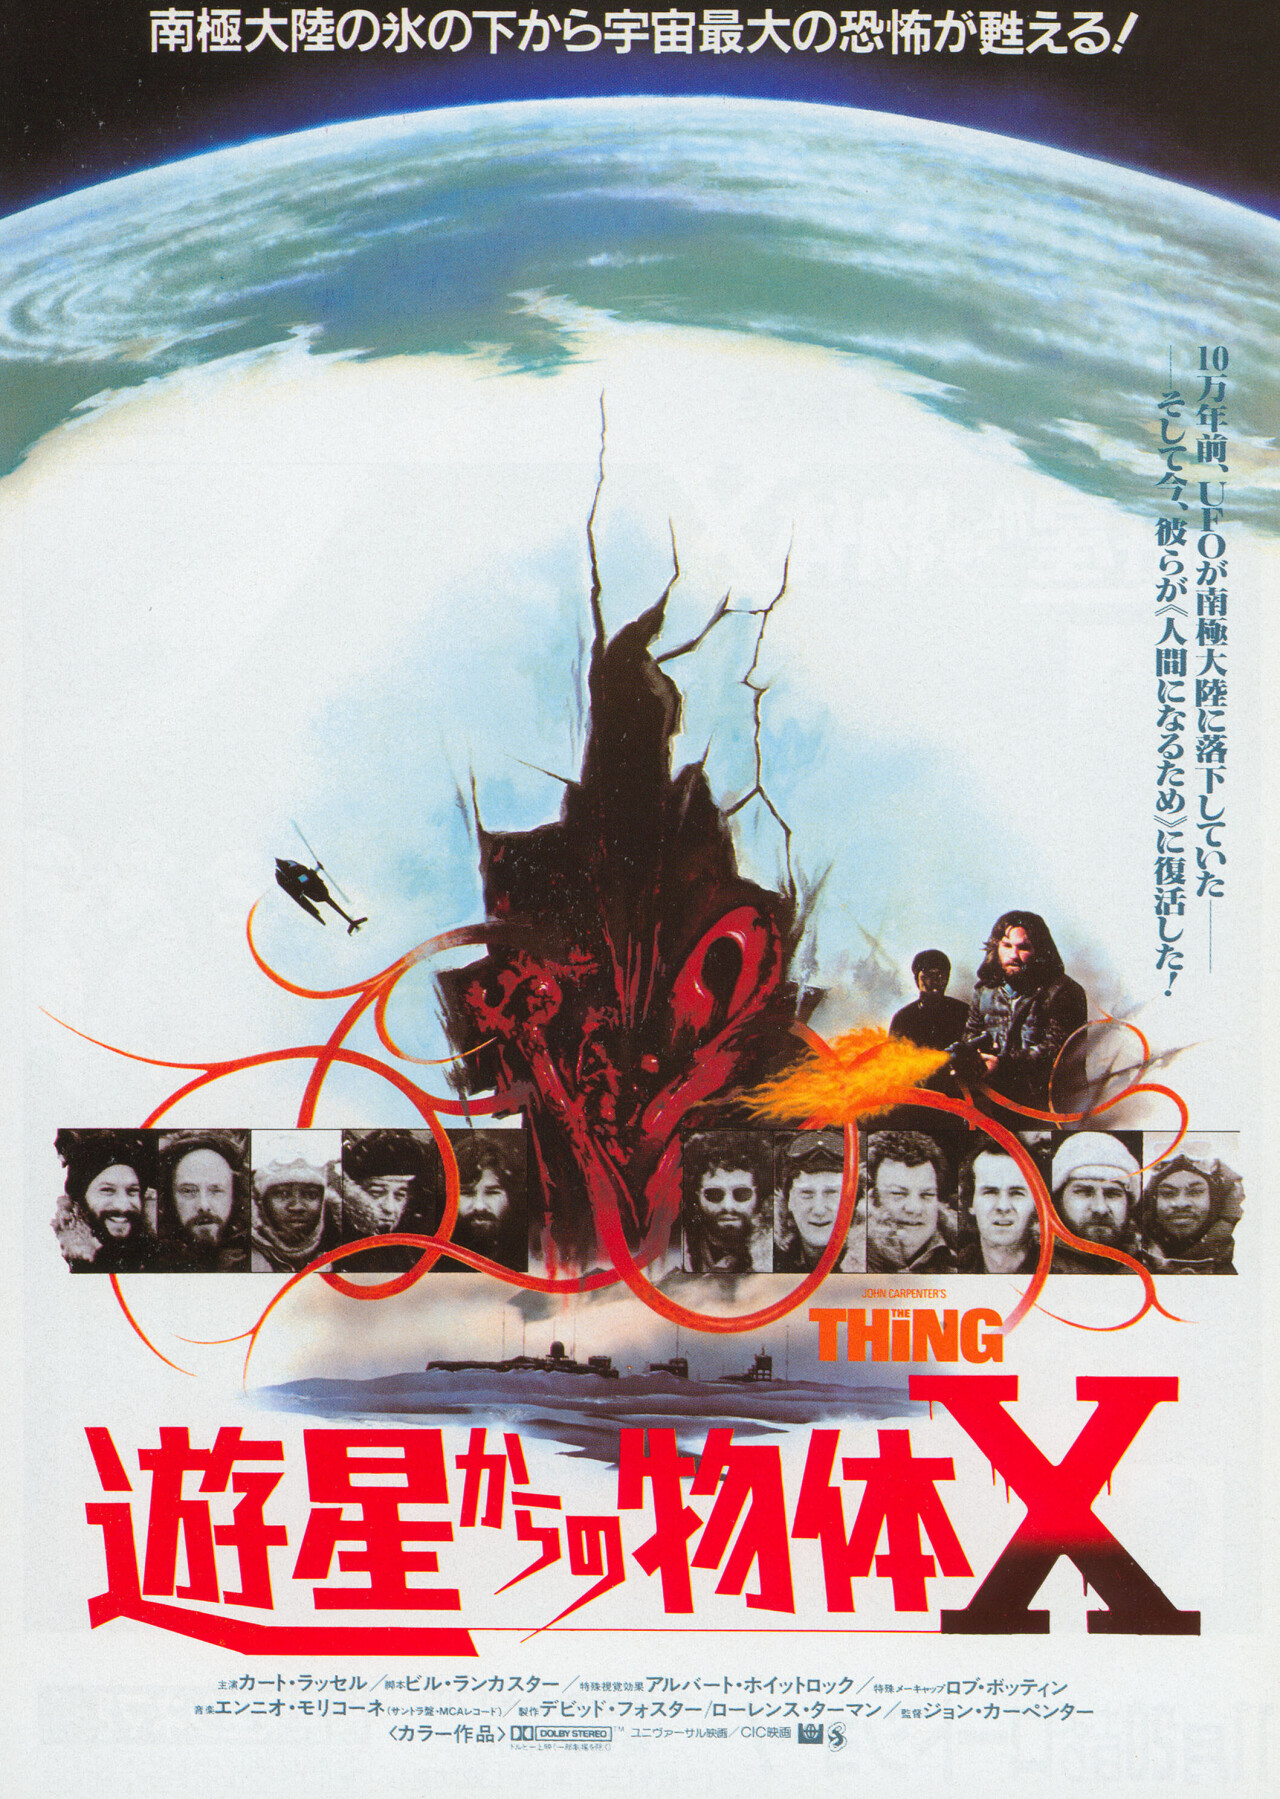 Нечто (The Thing, 1982), режиссёр Джон Карпентер, японский постер к фильму (ужасы, 1982 год)